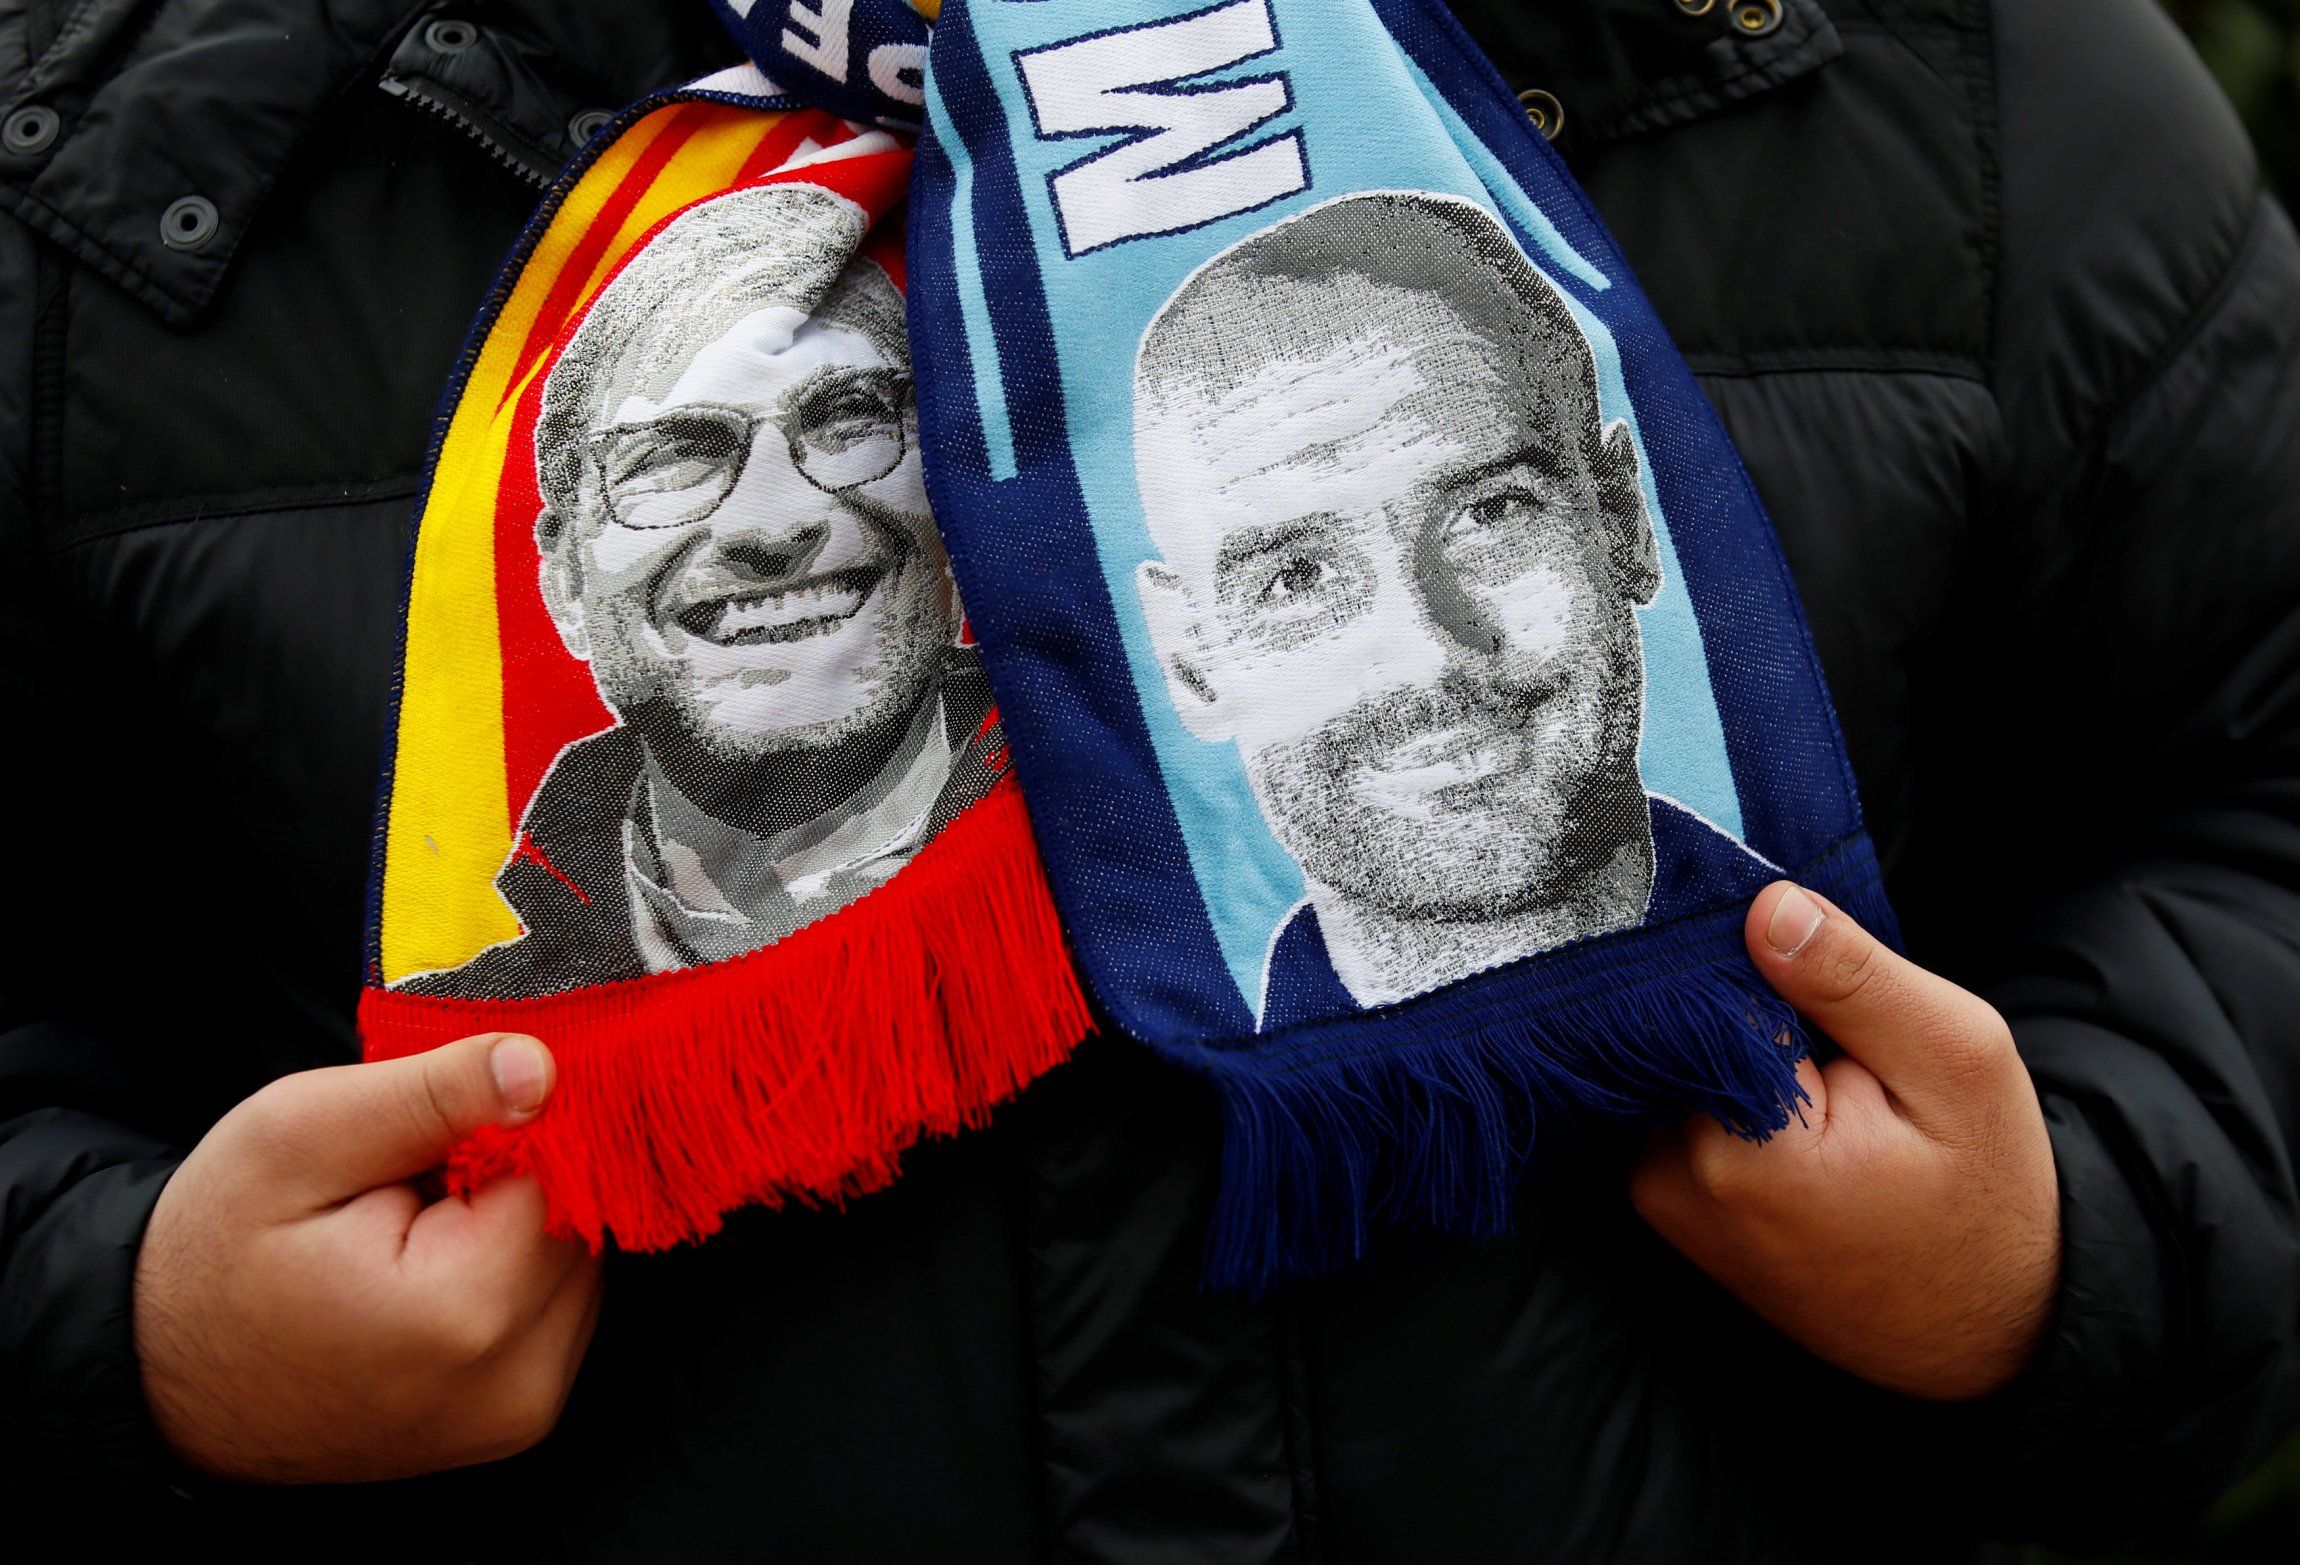 Jurgen Klopp and Pep Guardiola scarves